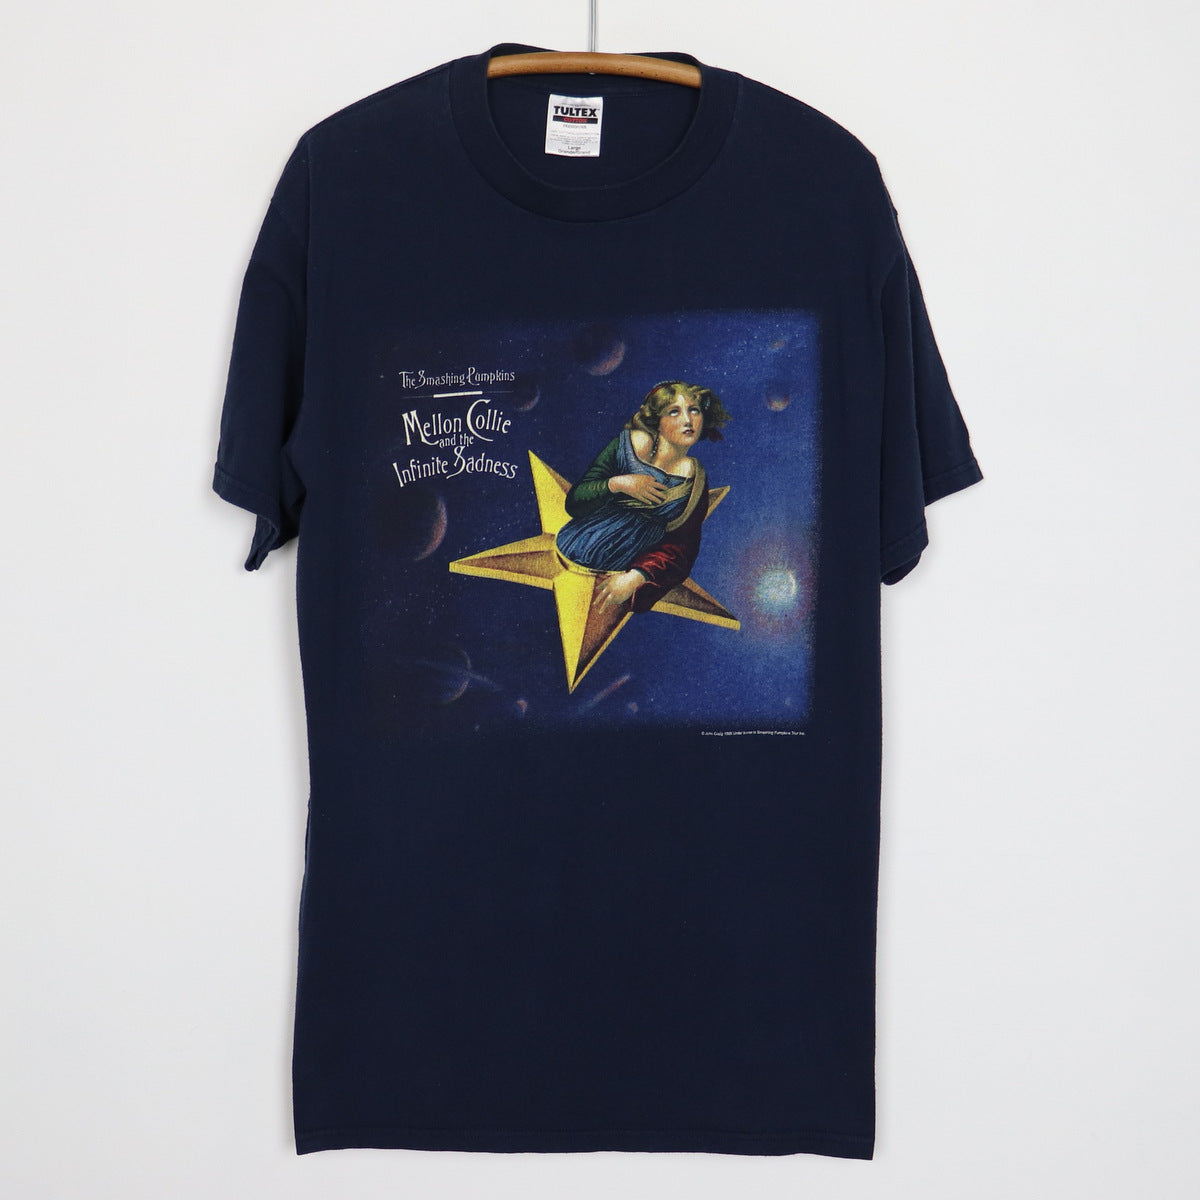 1995 Smashing Pumpkins Mellon Collie And The Infinite Sadness Tour Shirt